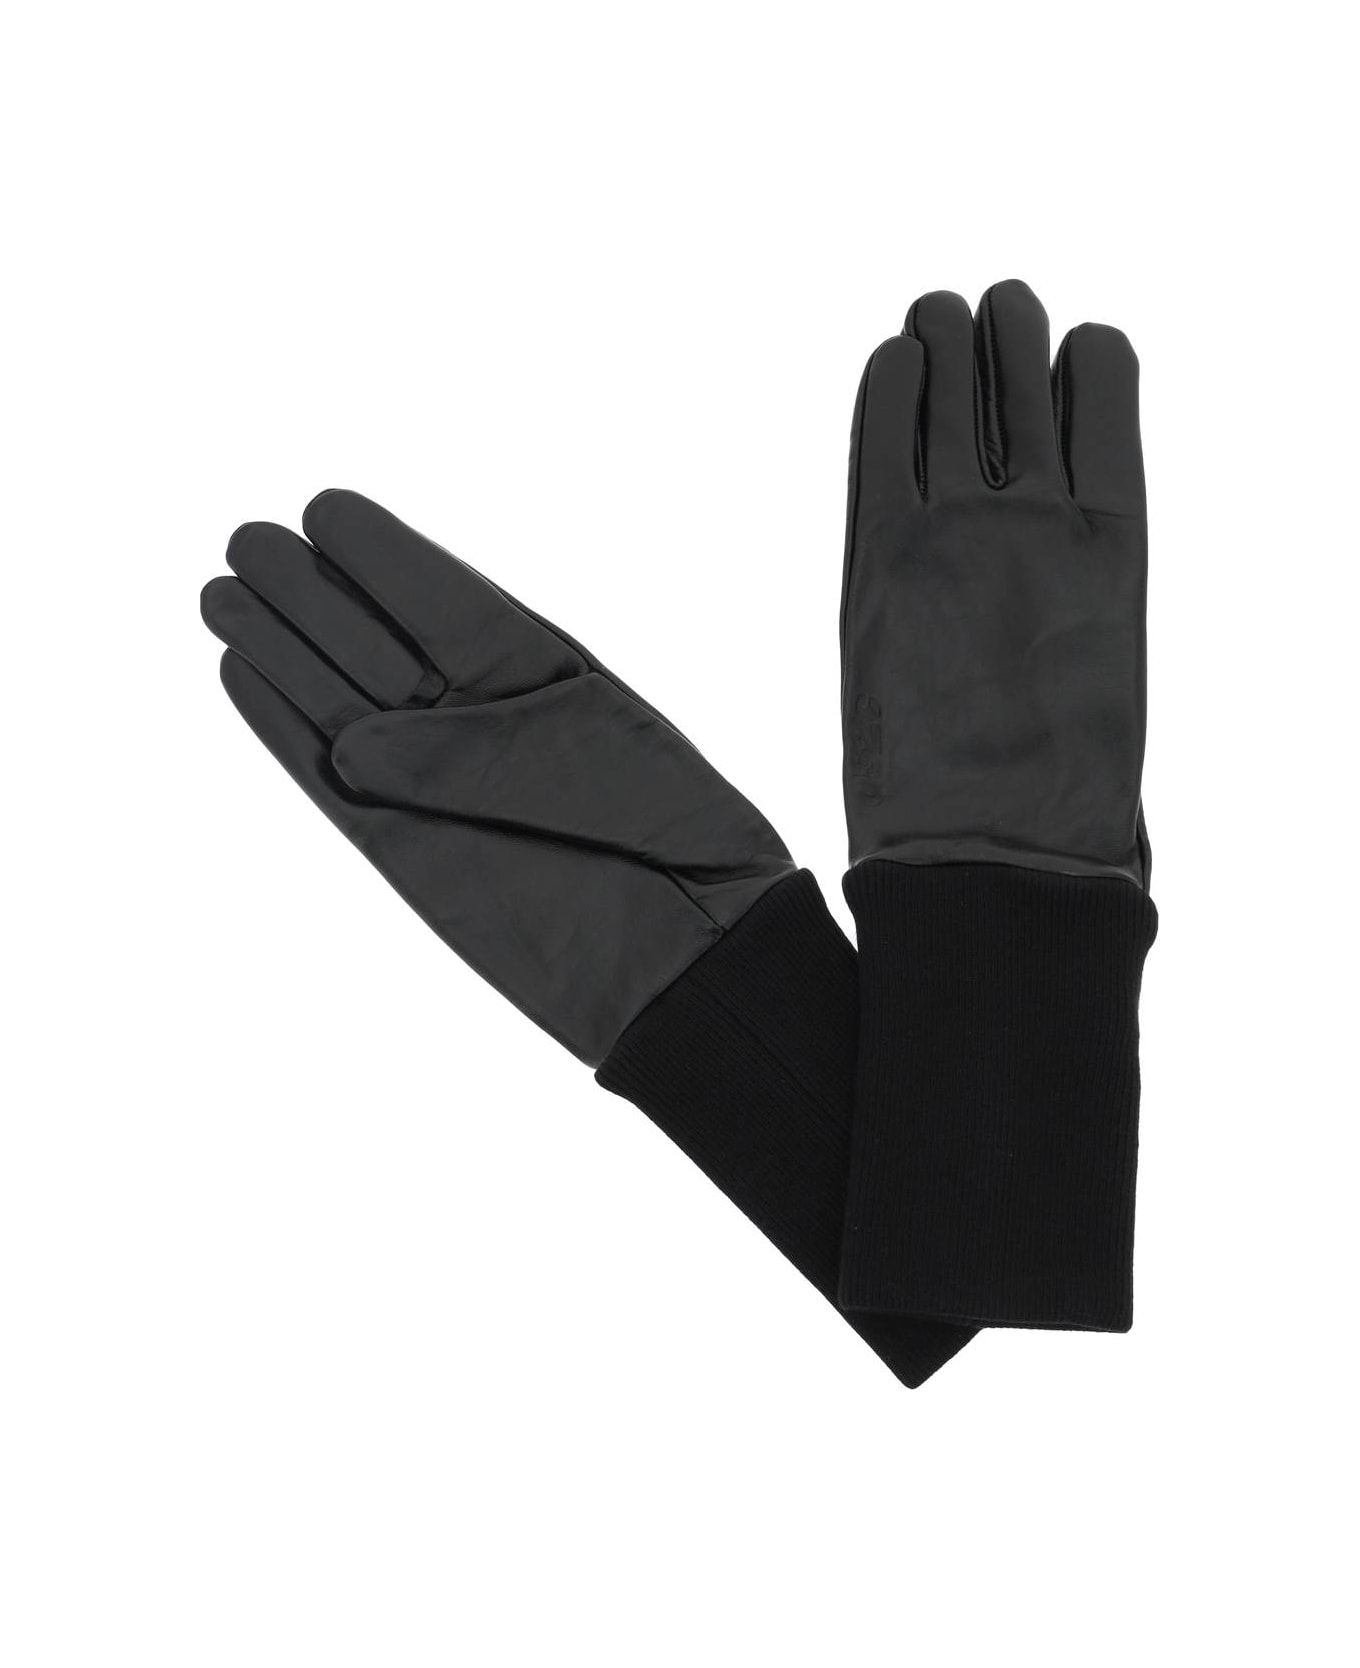 032c Leather Gloves - BLACK (Black)